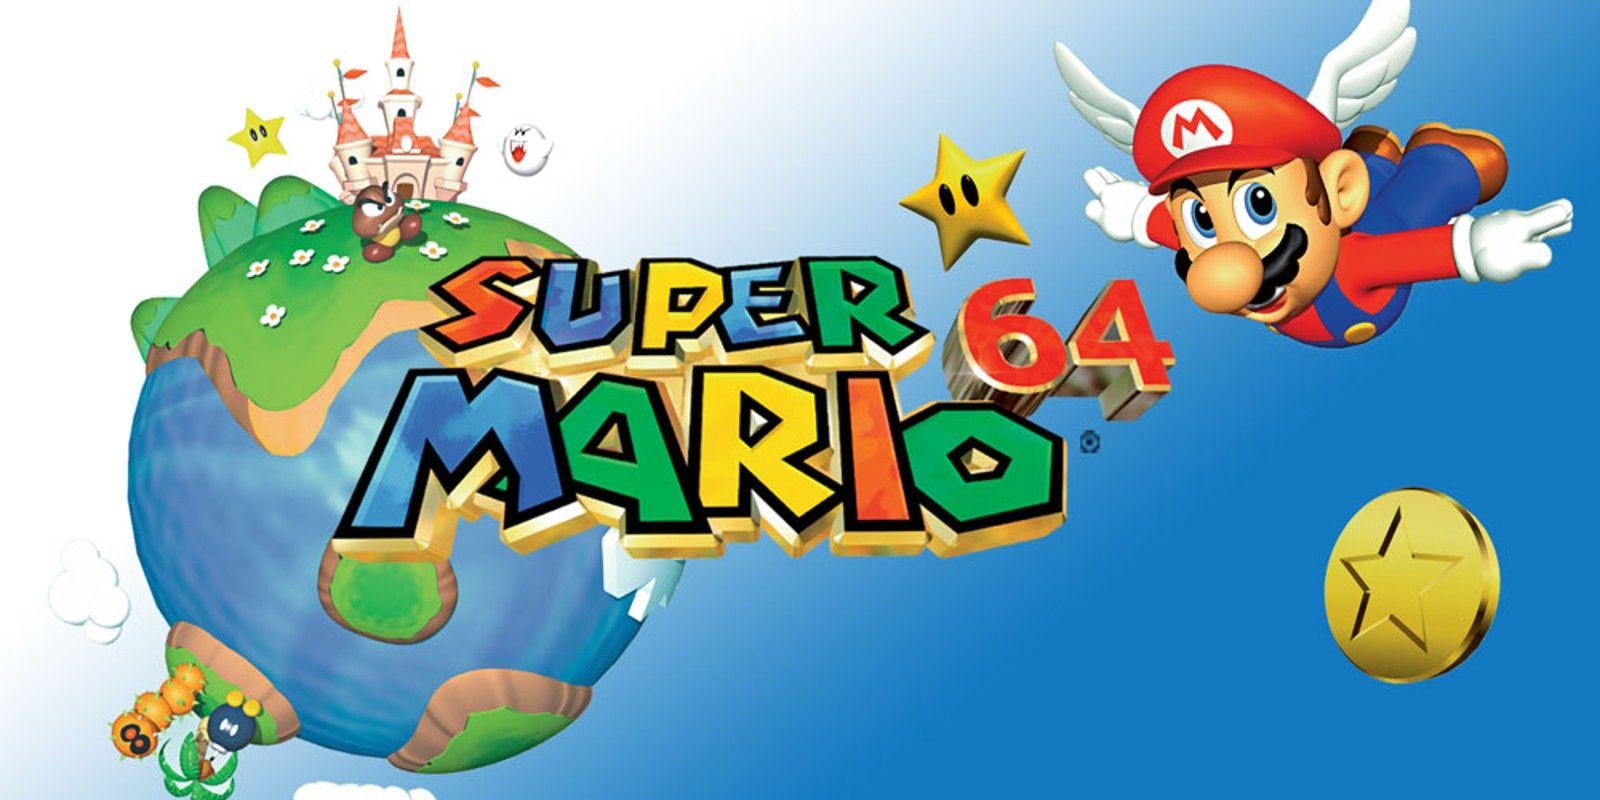 First Person Mario 64 mod